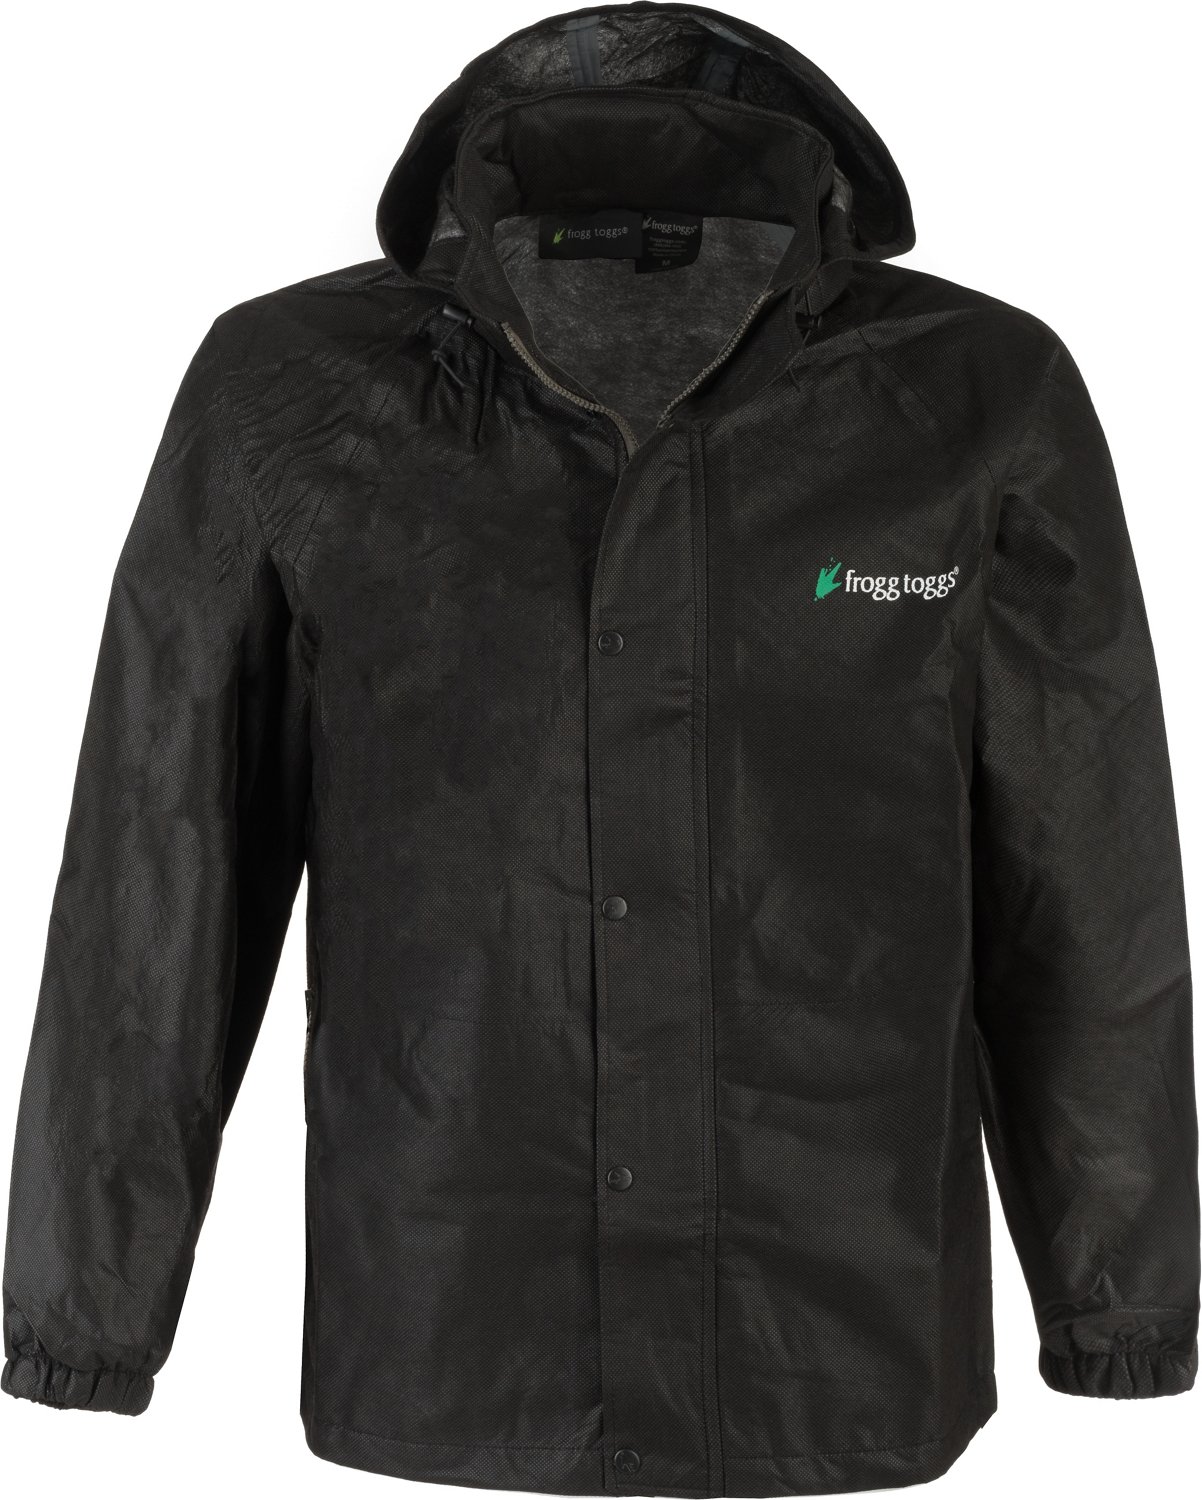 Fishing Rain Gear: Jackets & Rain Suits